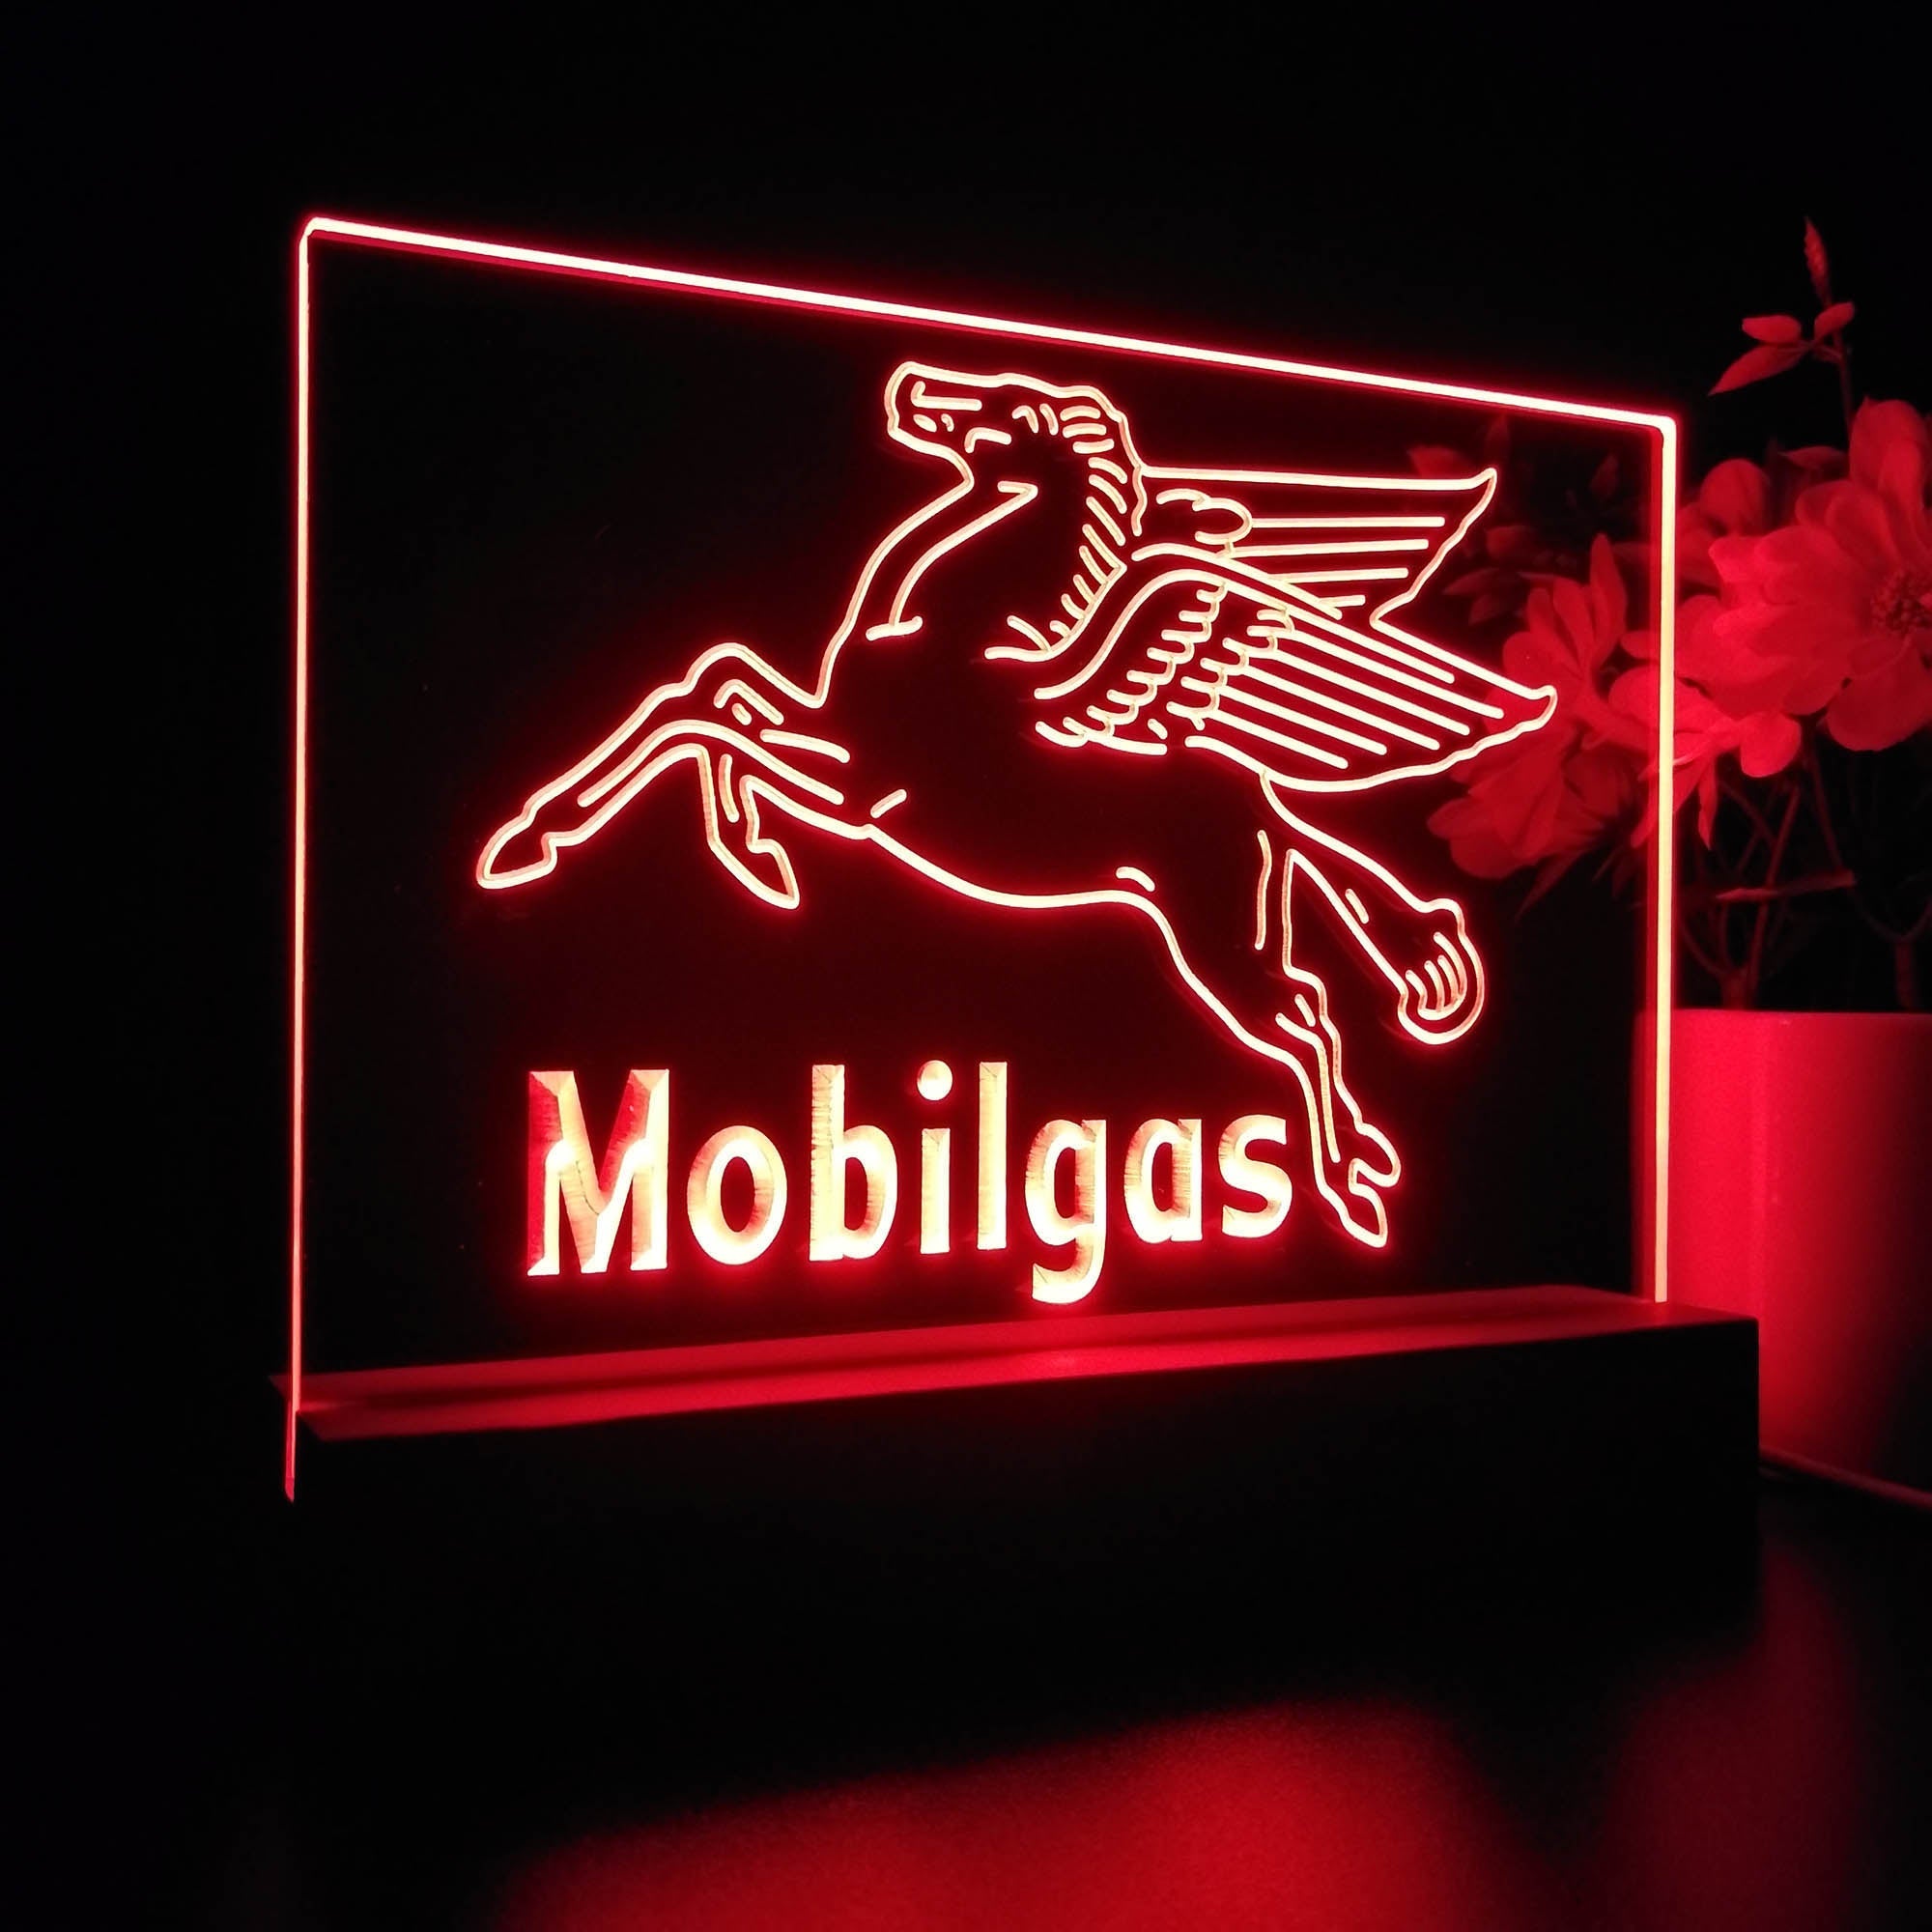 Mobil Gas Flying Horse 3D Illusion Night Light Desk Lamp